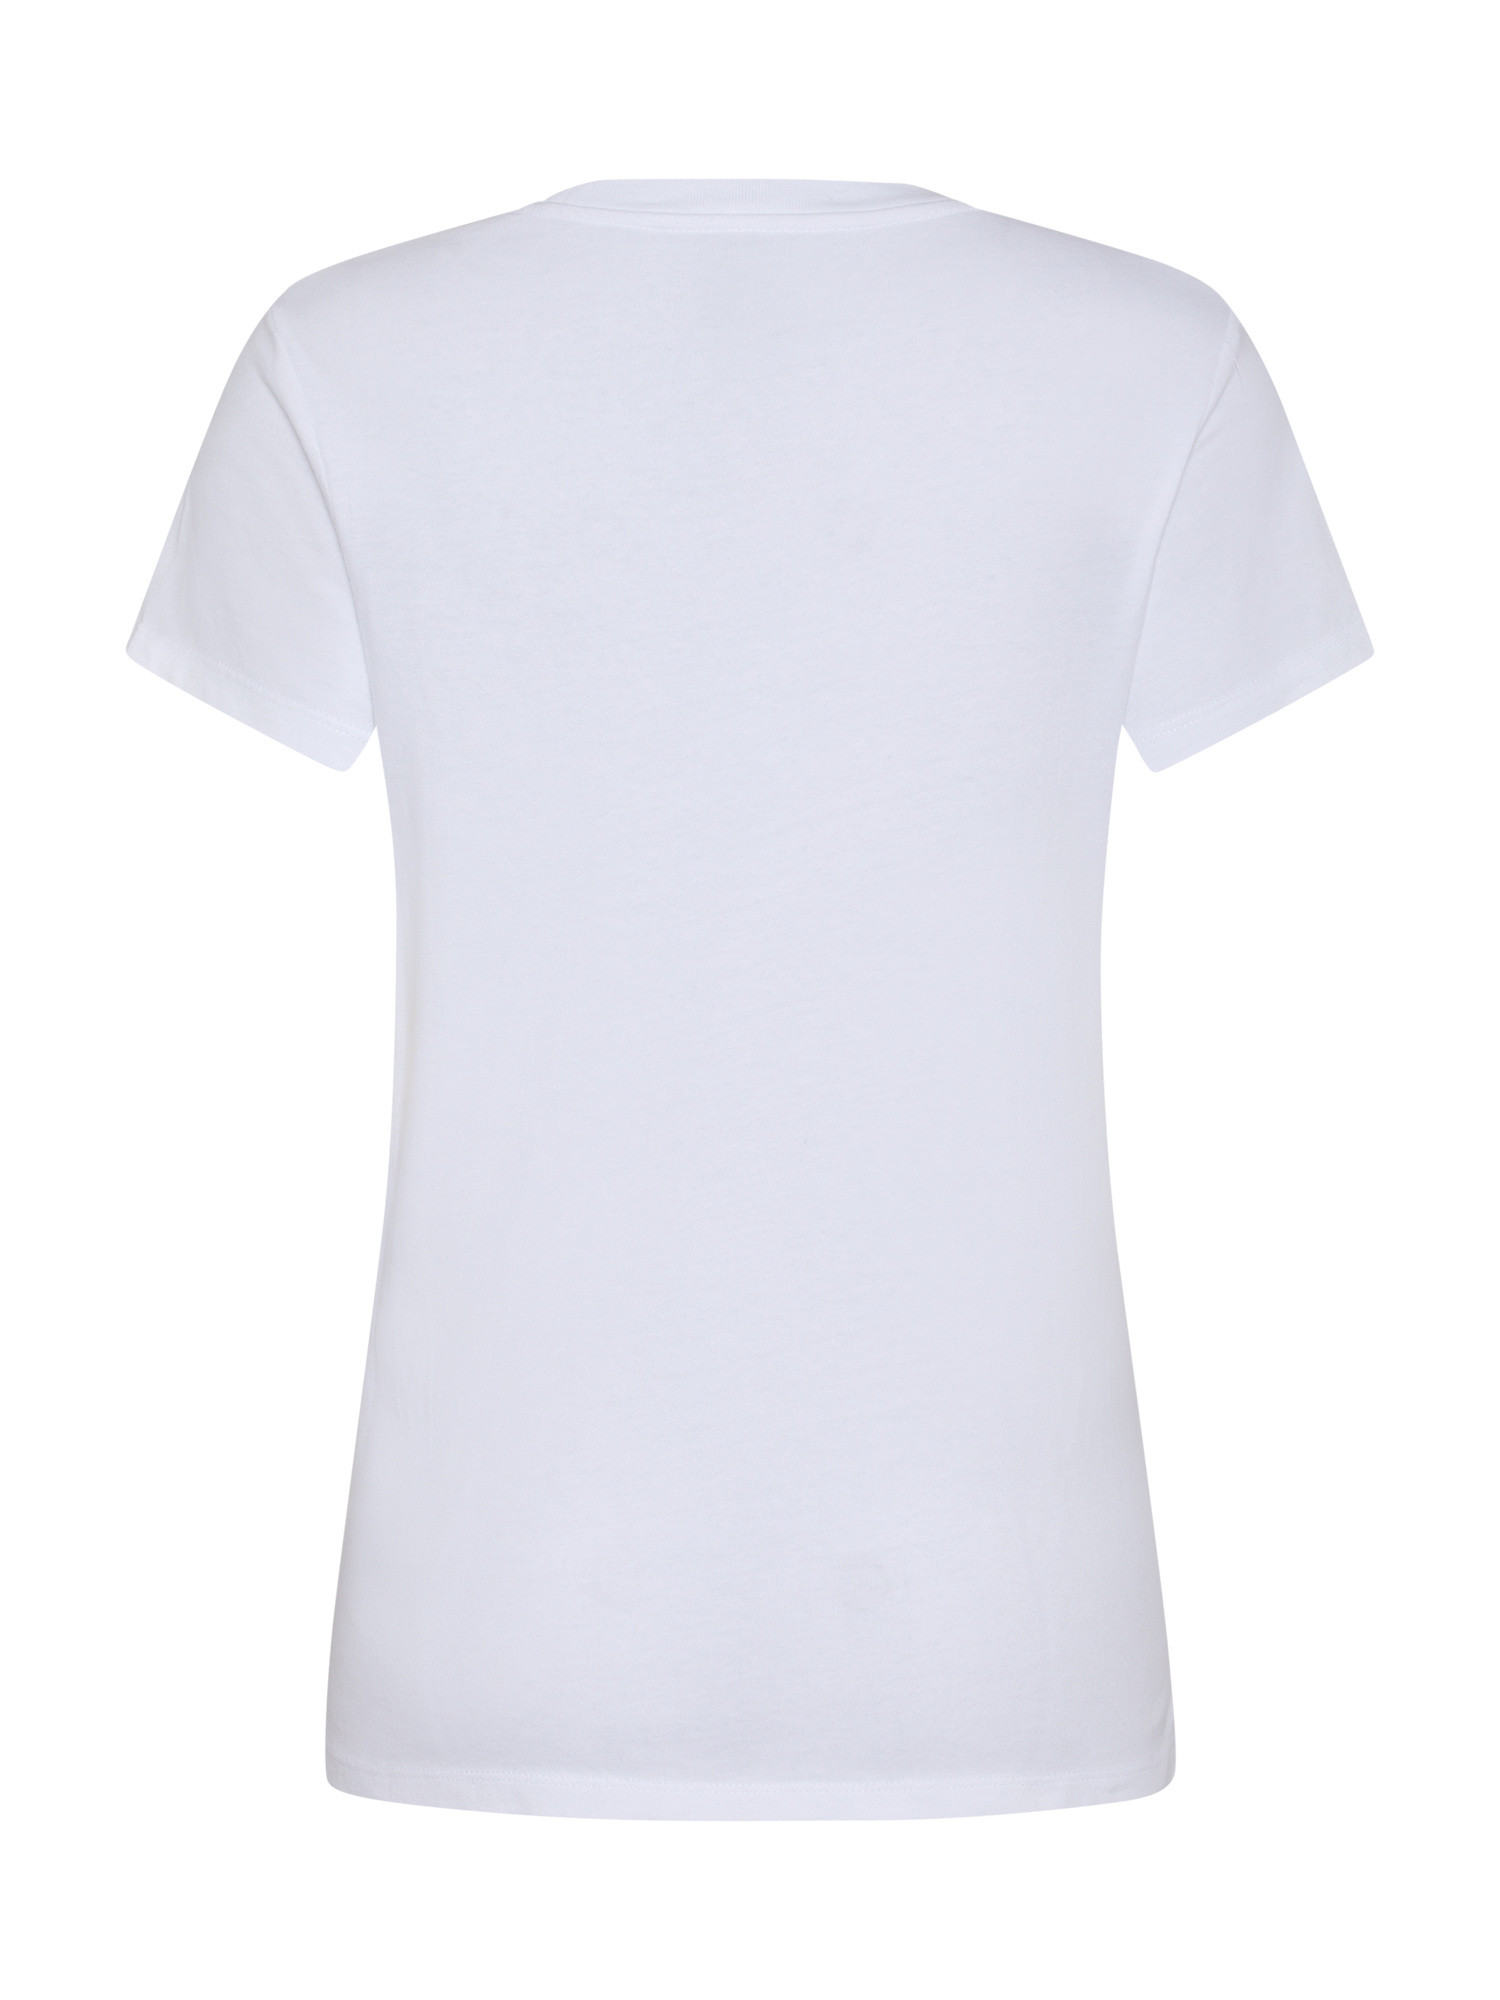 Levi's - T-shirt con logo, Bianco, large image number 1